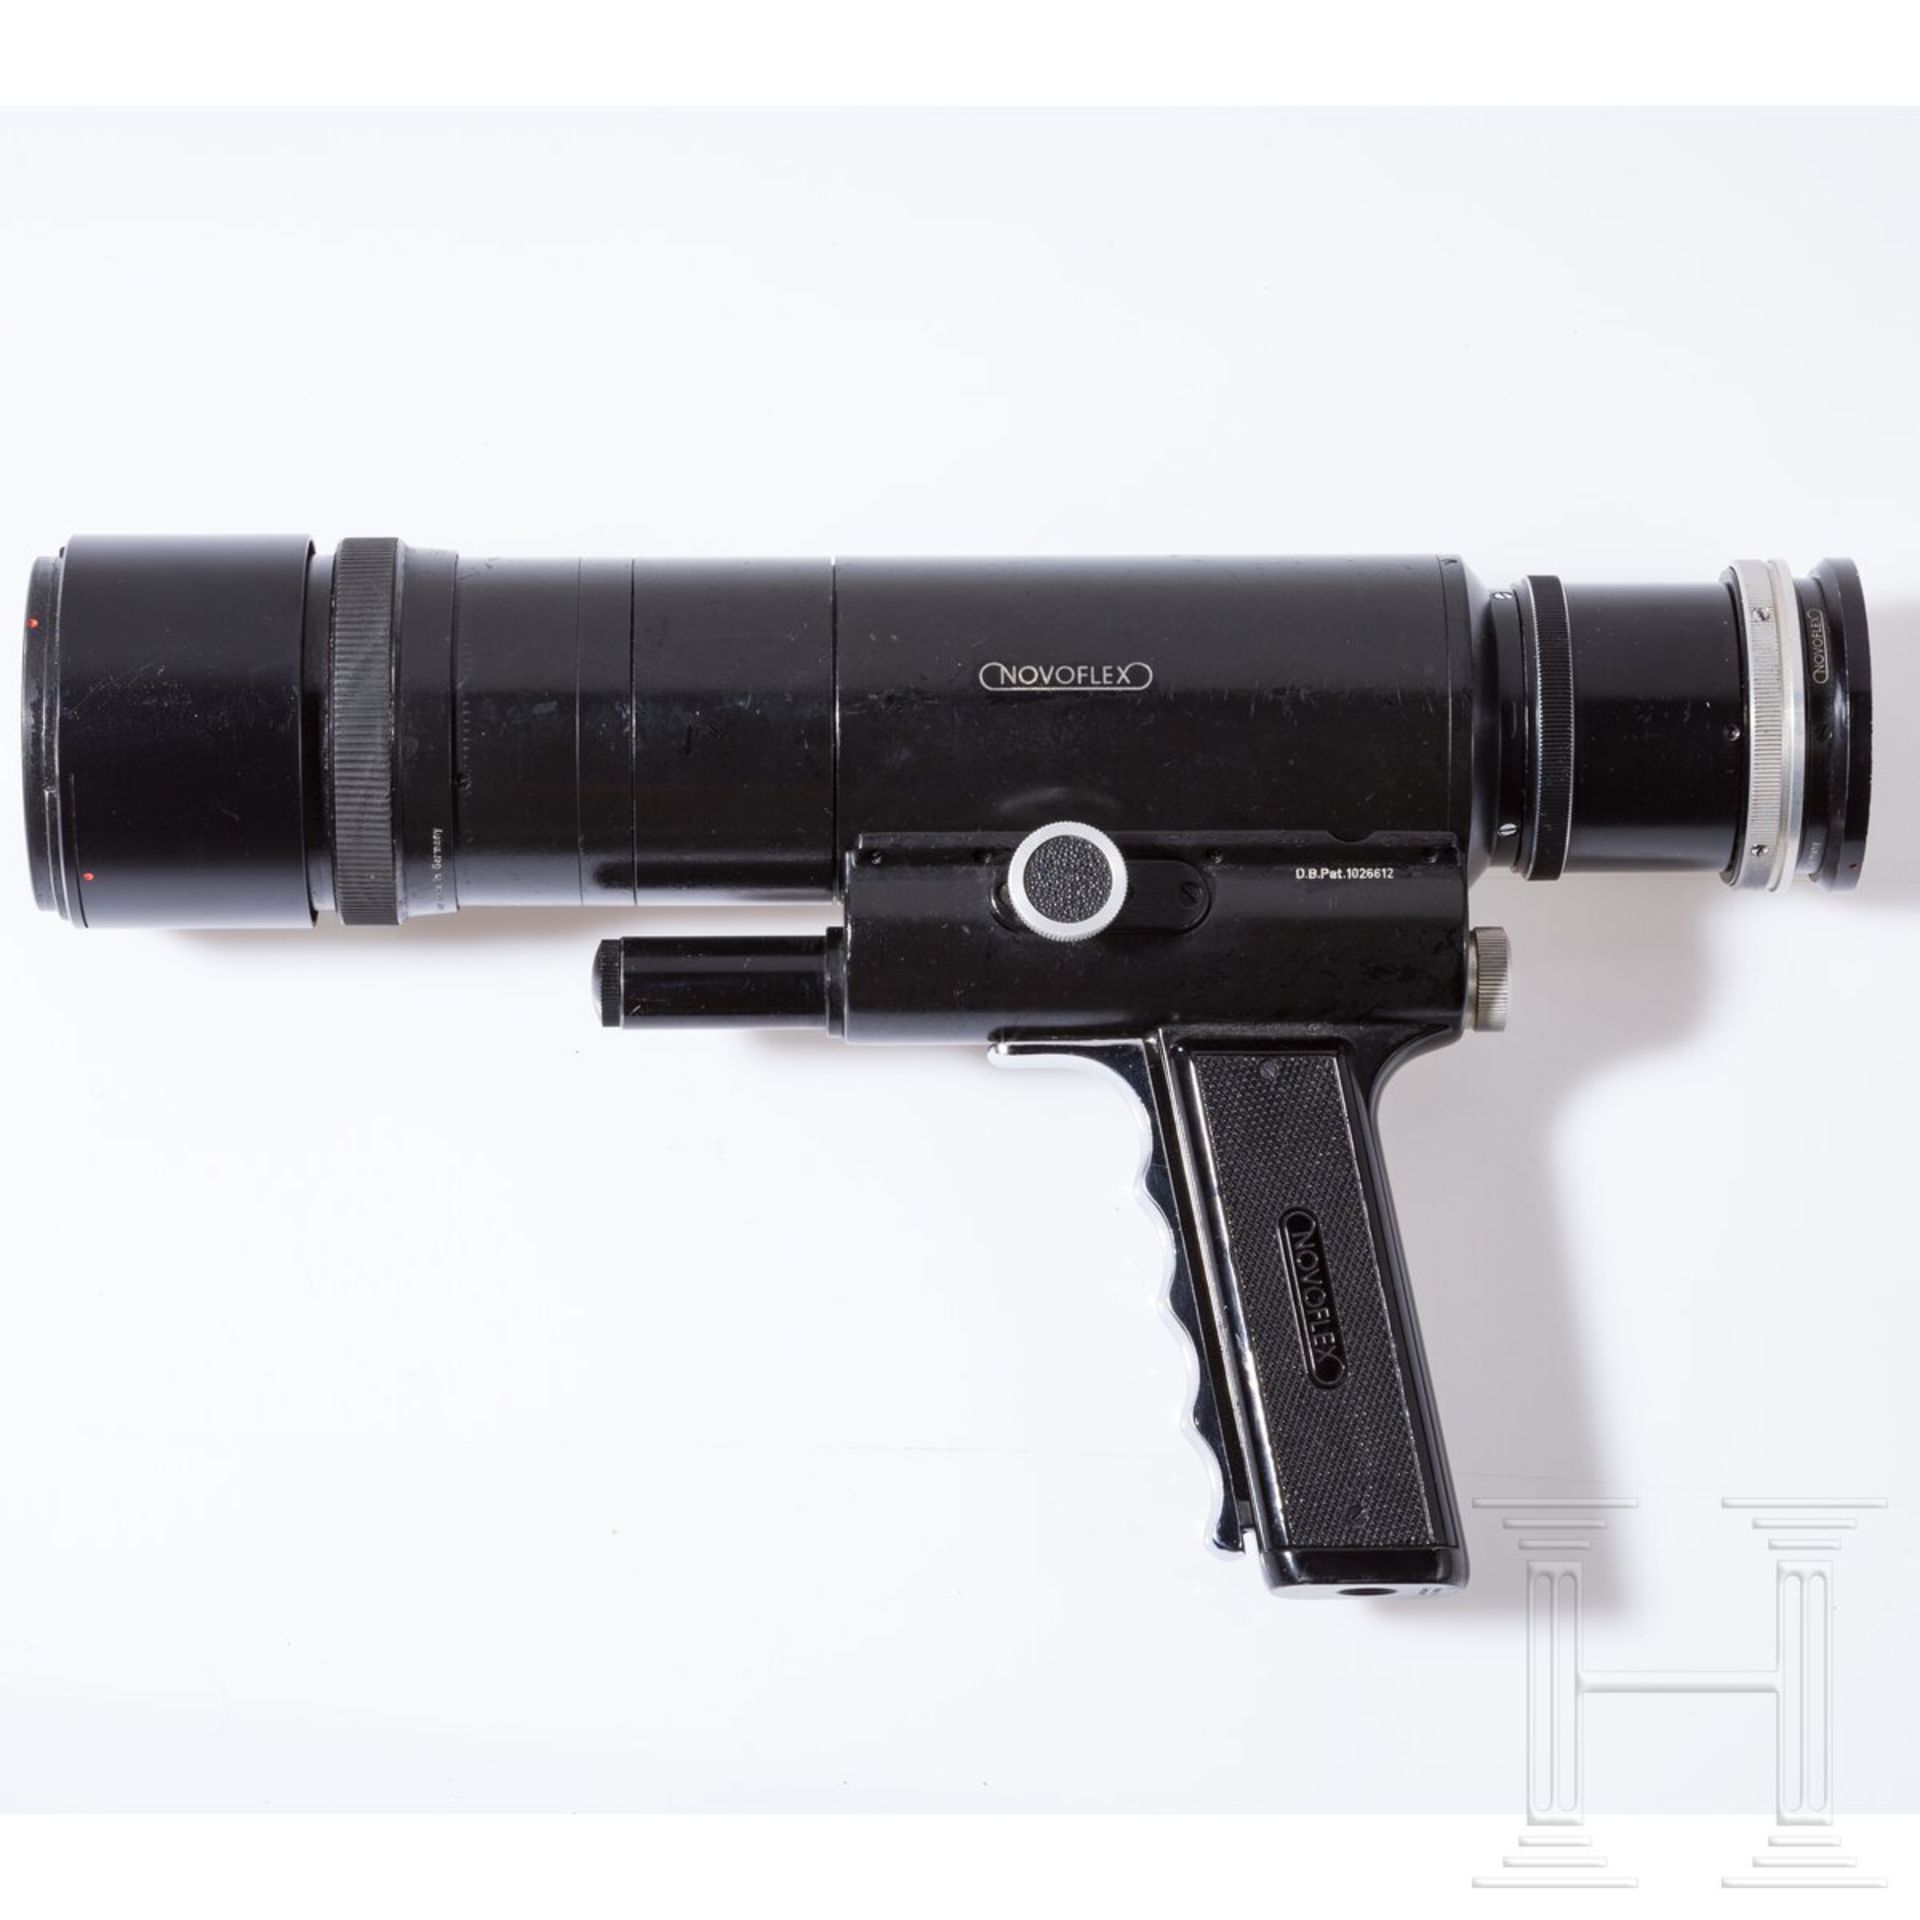 Novoflex-Schnellschuss-Objektiv Novoflexar 1:5,6 / 280 mm "Follow Focus Lense" - Image 3 of 4